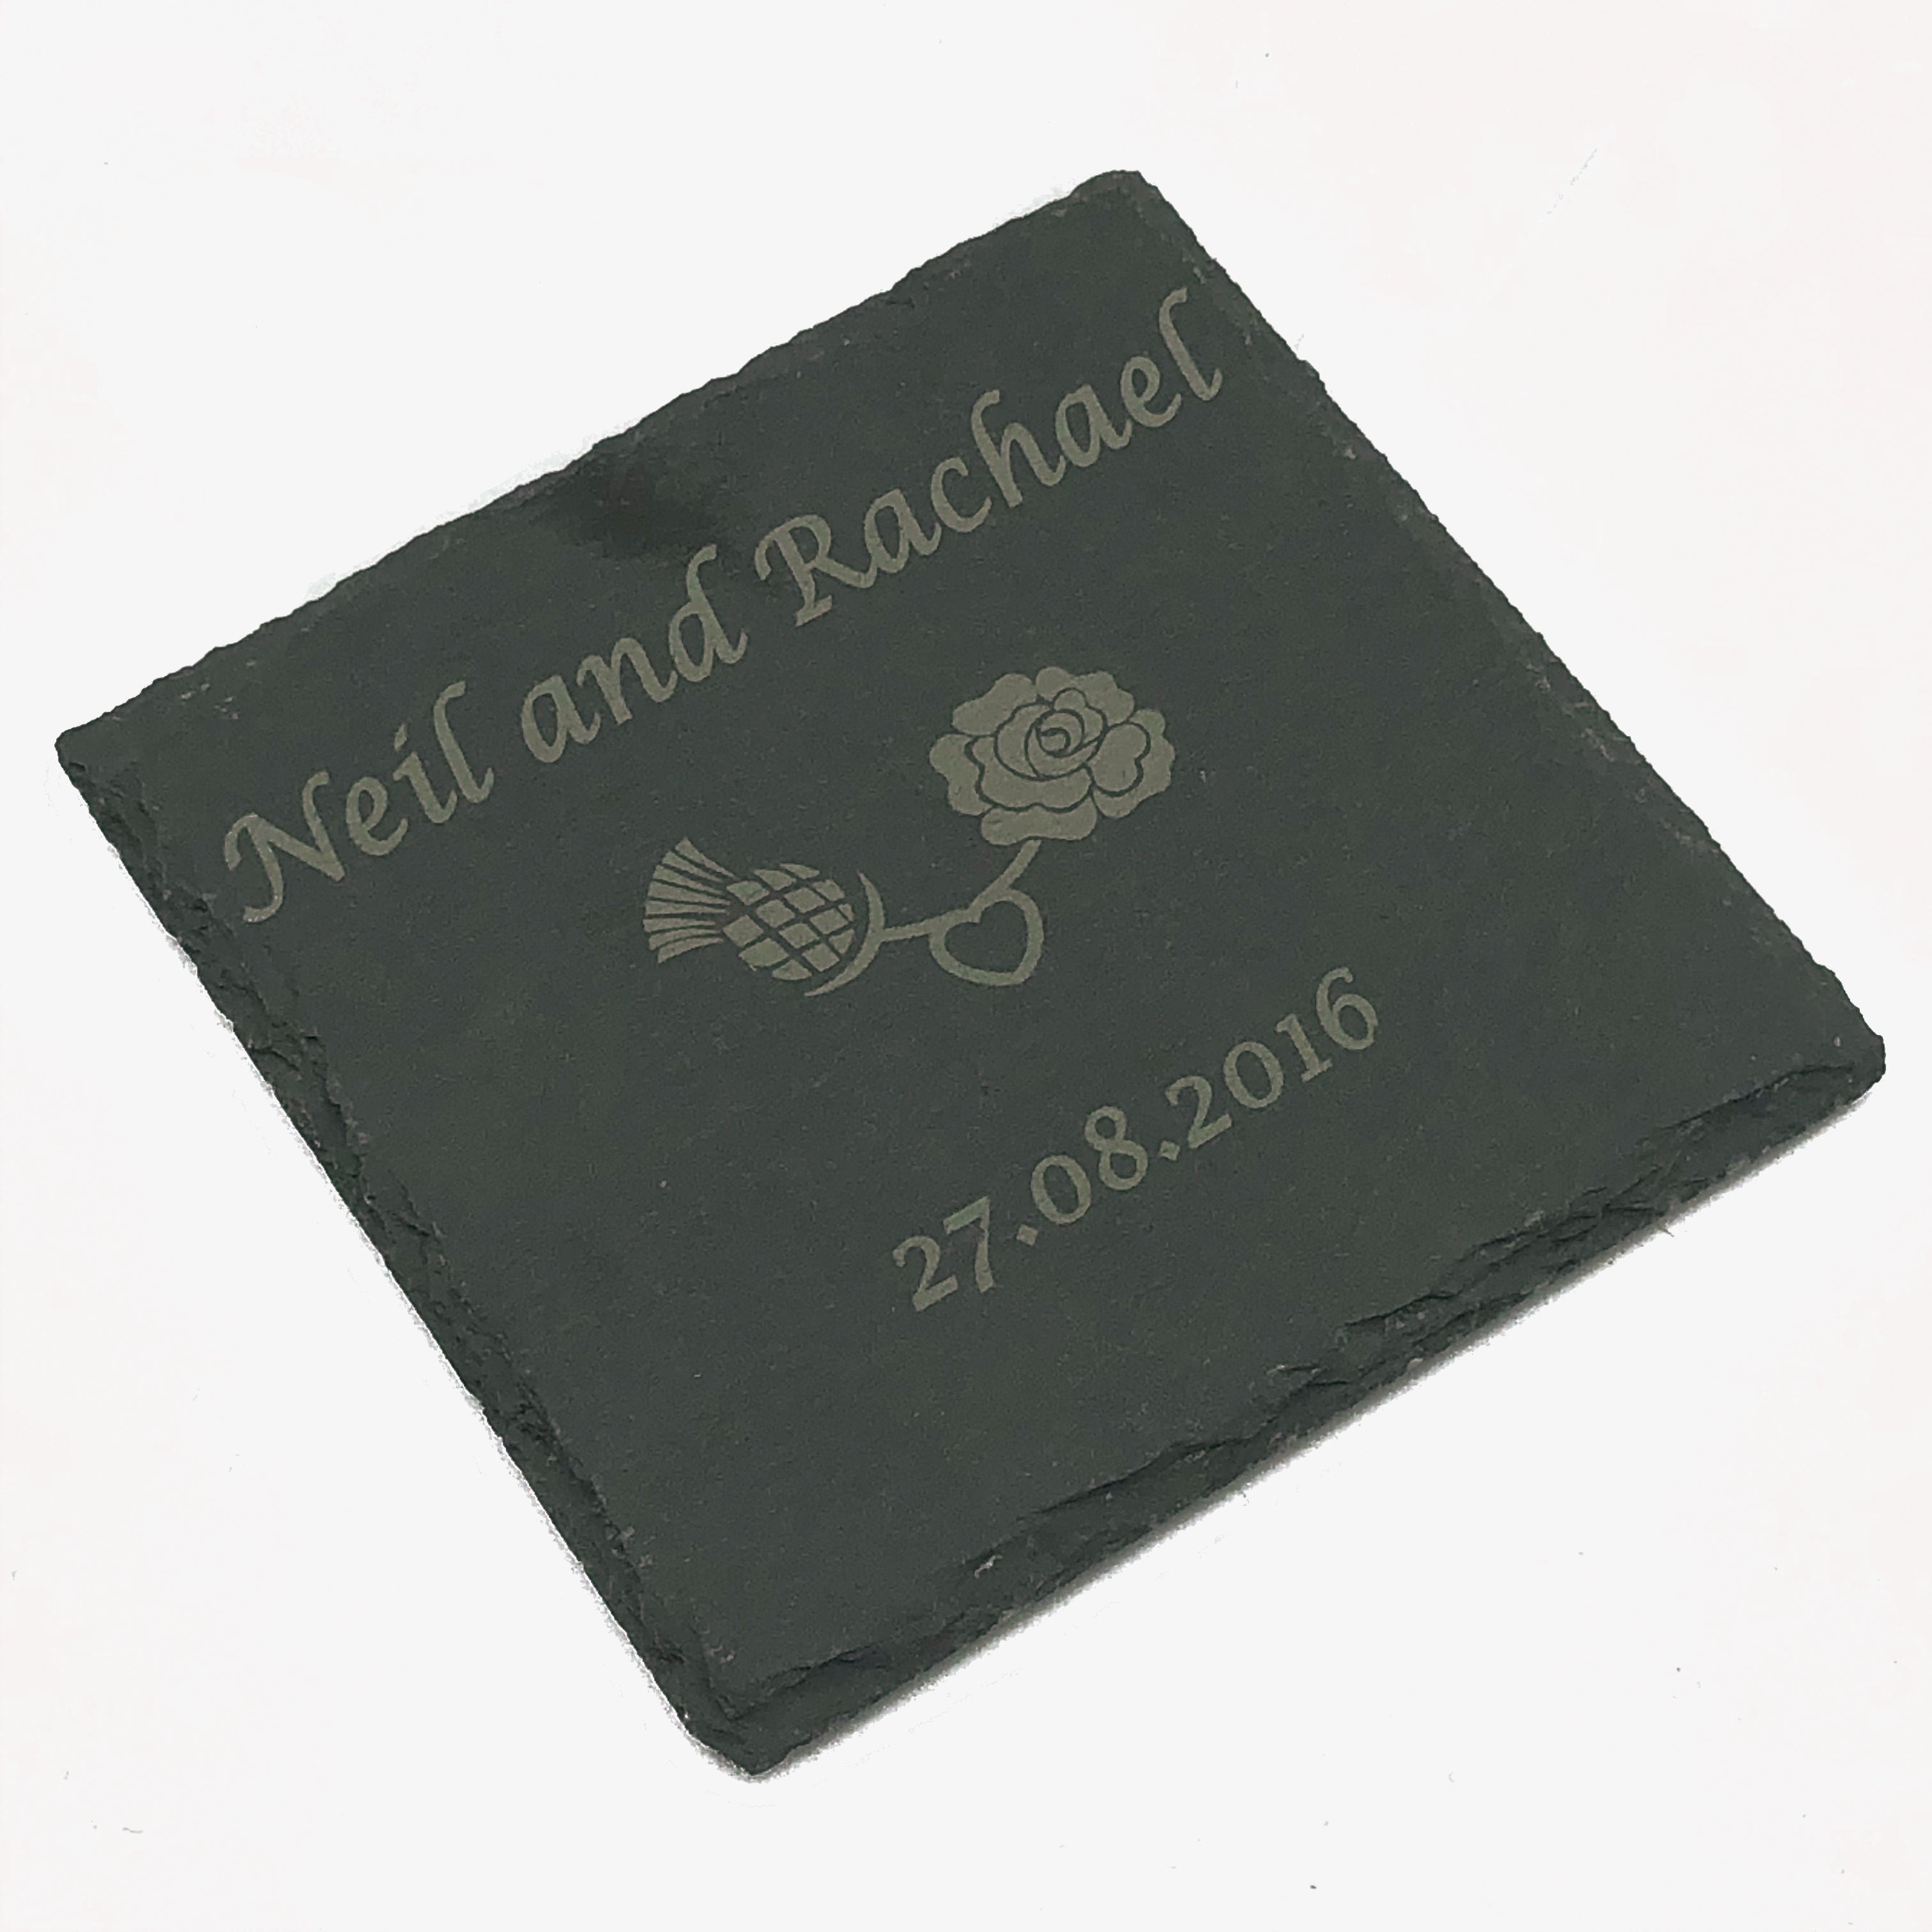 Personalised slate square wedding coaster - names, date, thistle-rose motif